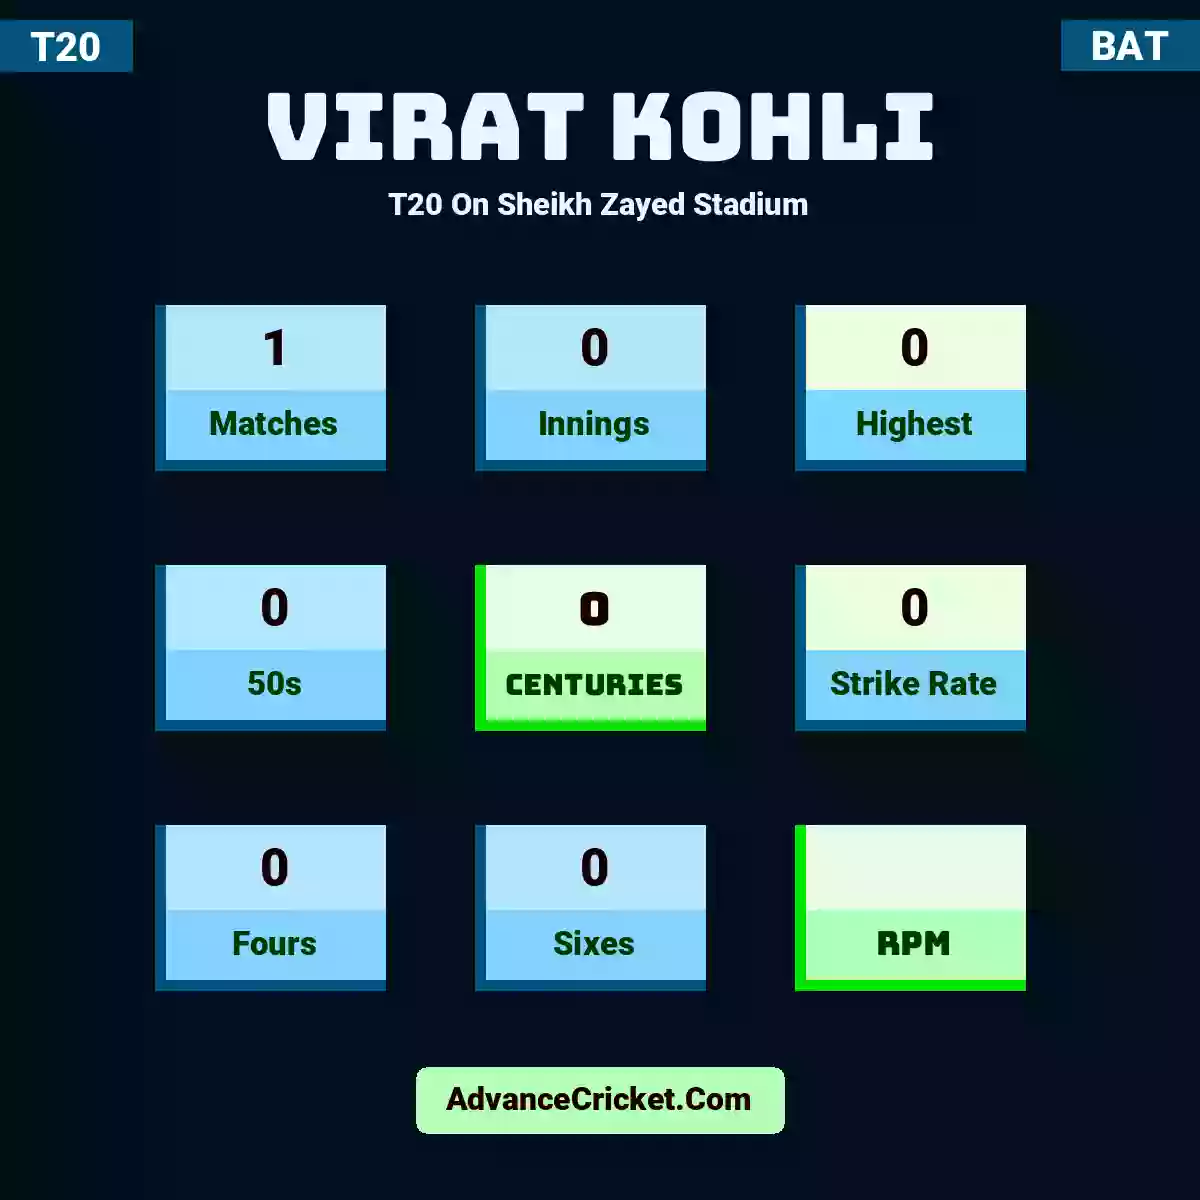 Virat Kohli T20  On Sheikh Zayed Stadium, Virat Kohli played 1 matches, scored 0 runs as highest, 0 half-centuries, and 0 centuries, with a strike rate of 0. V.Kohli hit 0 fours and 0 sixes.